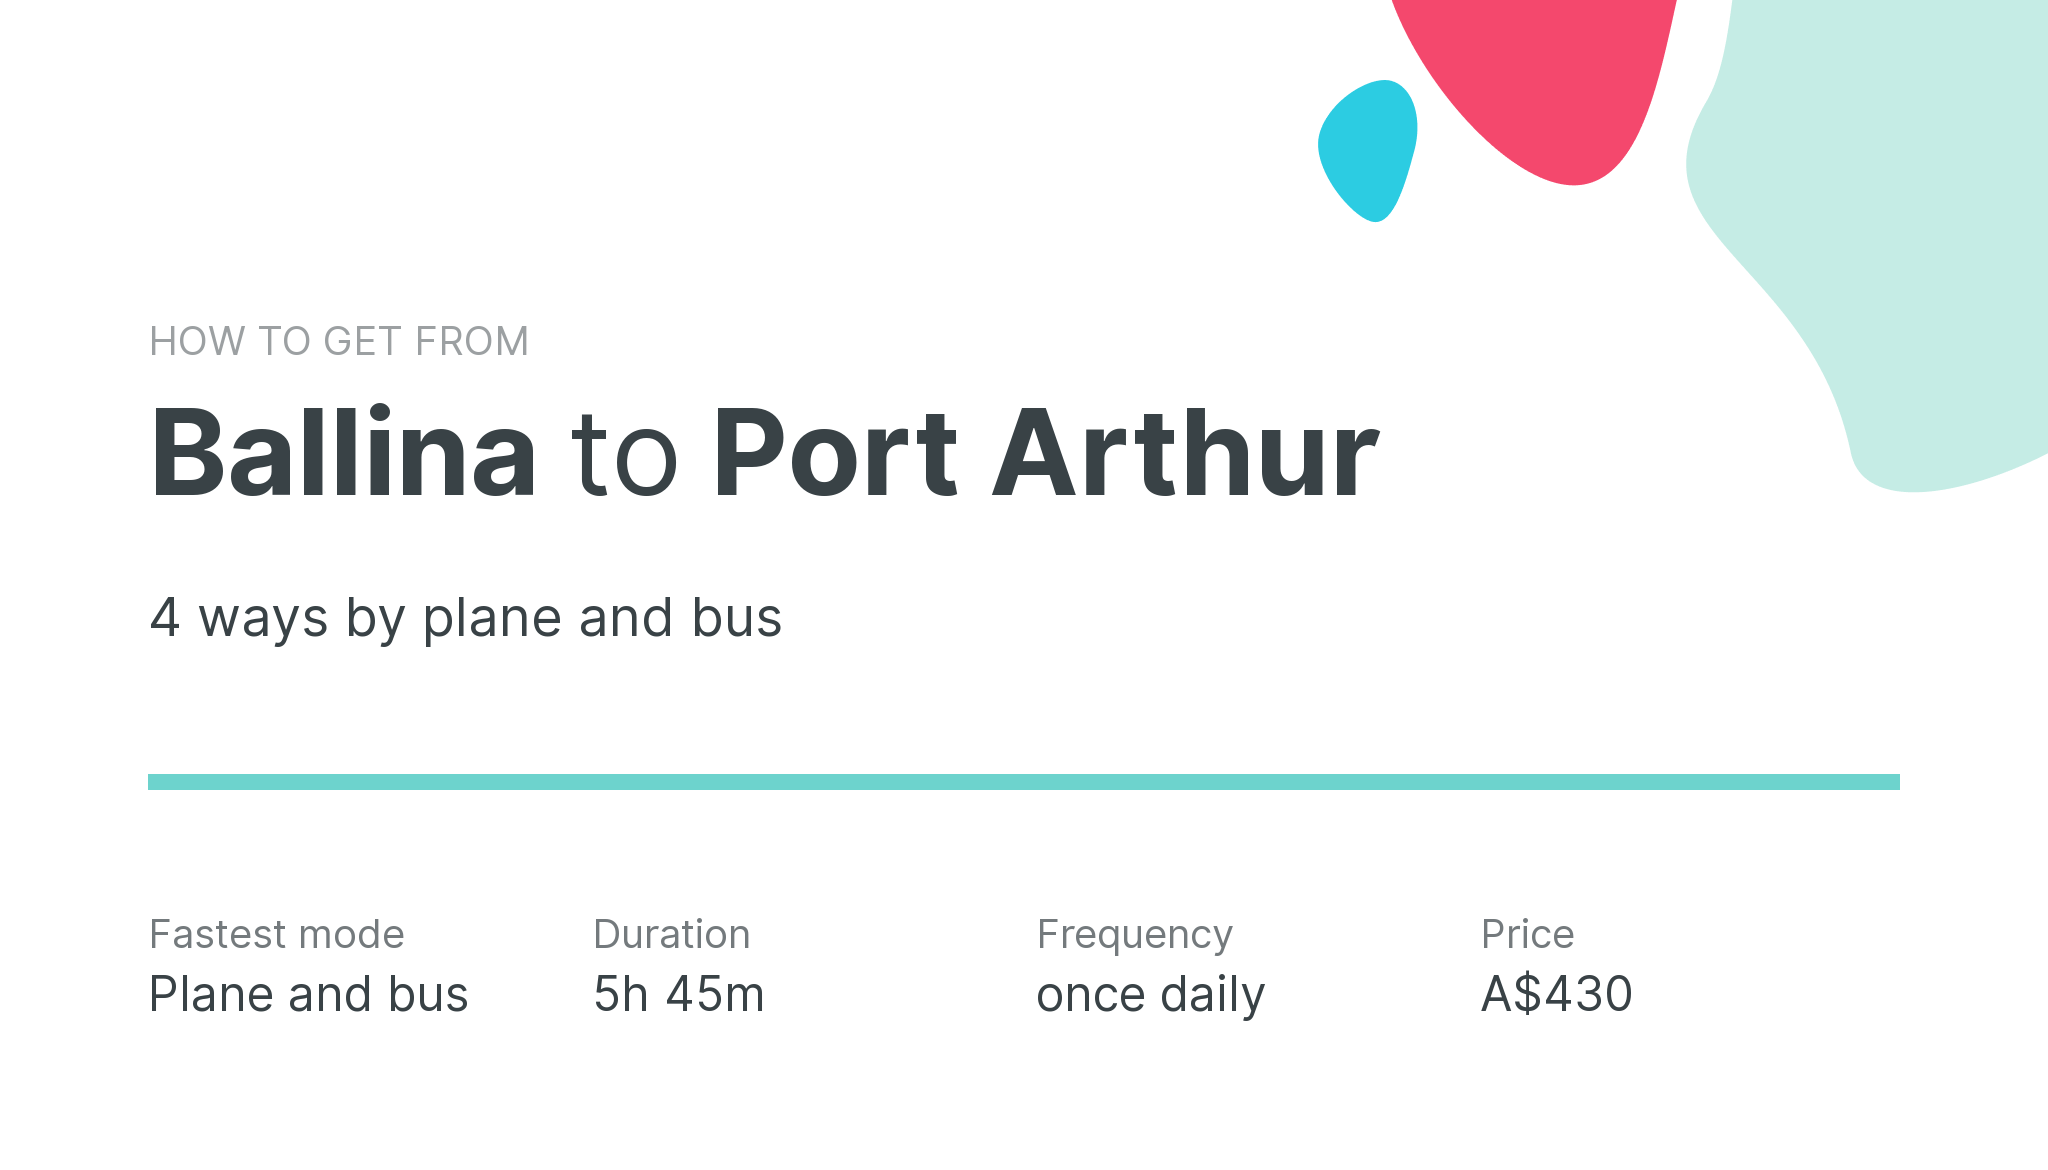 How do I get from Ballina to Port Arthur